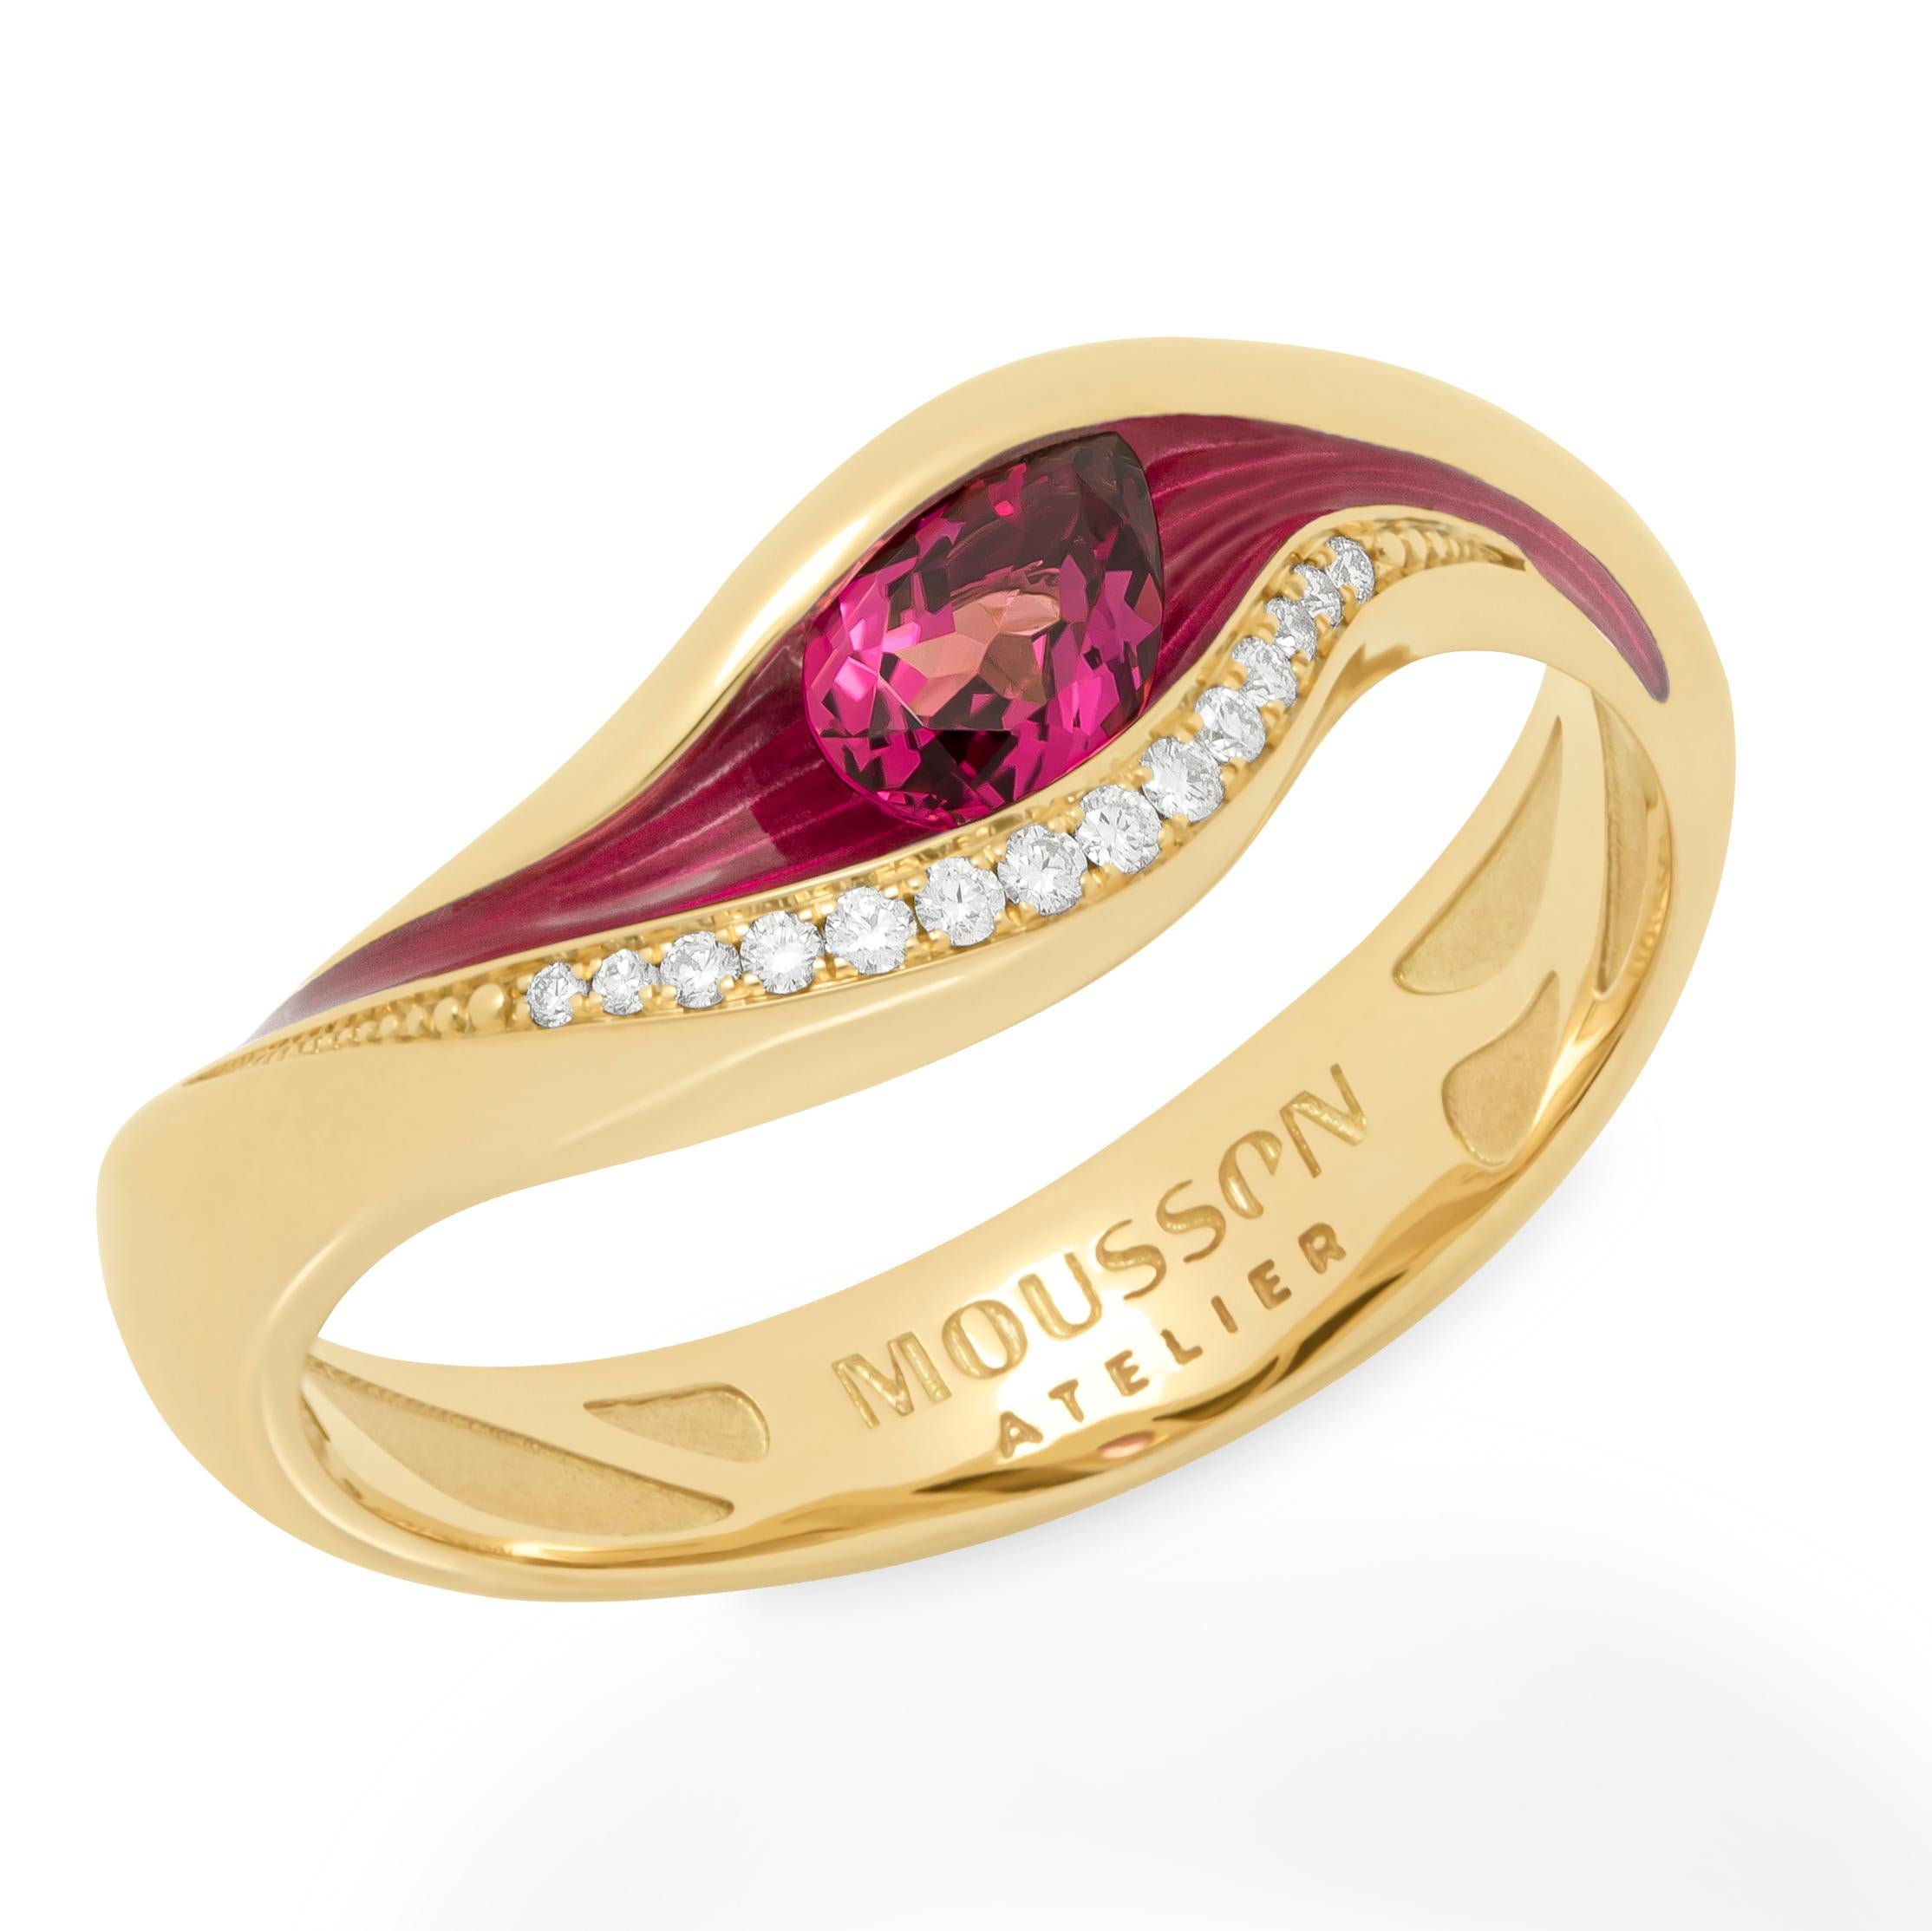 Rosa Turmalin Diamanten Emaille 18 Karat Gelbgold Geschmolzene Farben Ring
Unsere neue Kollektion 